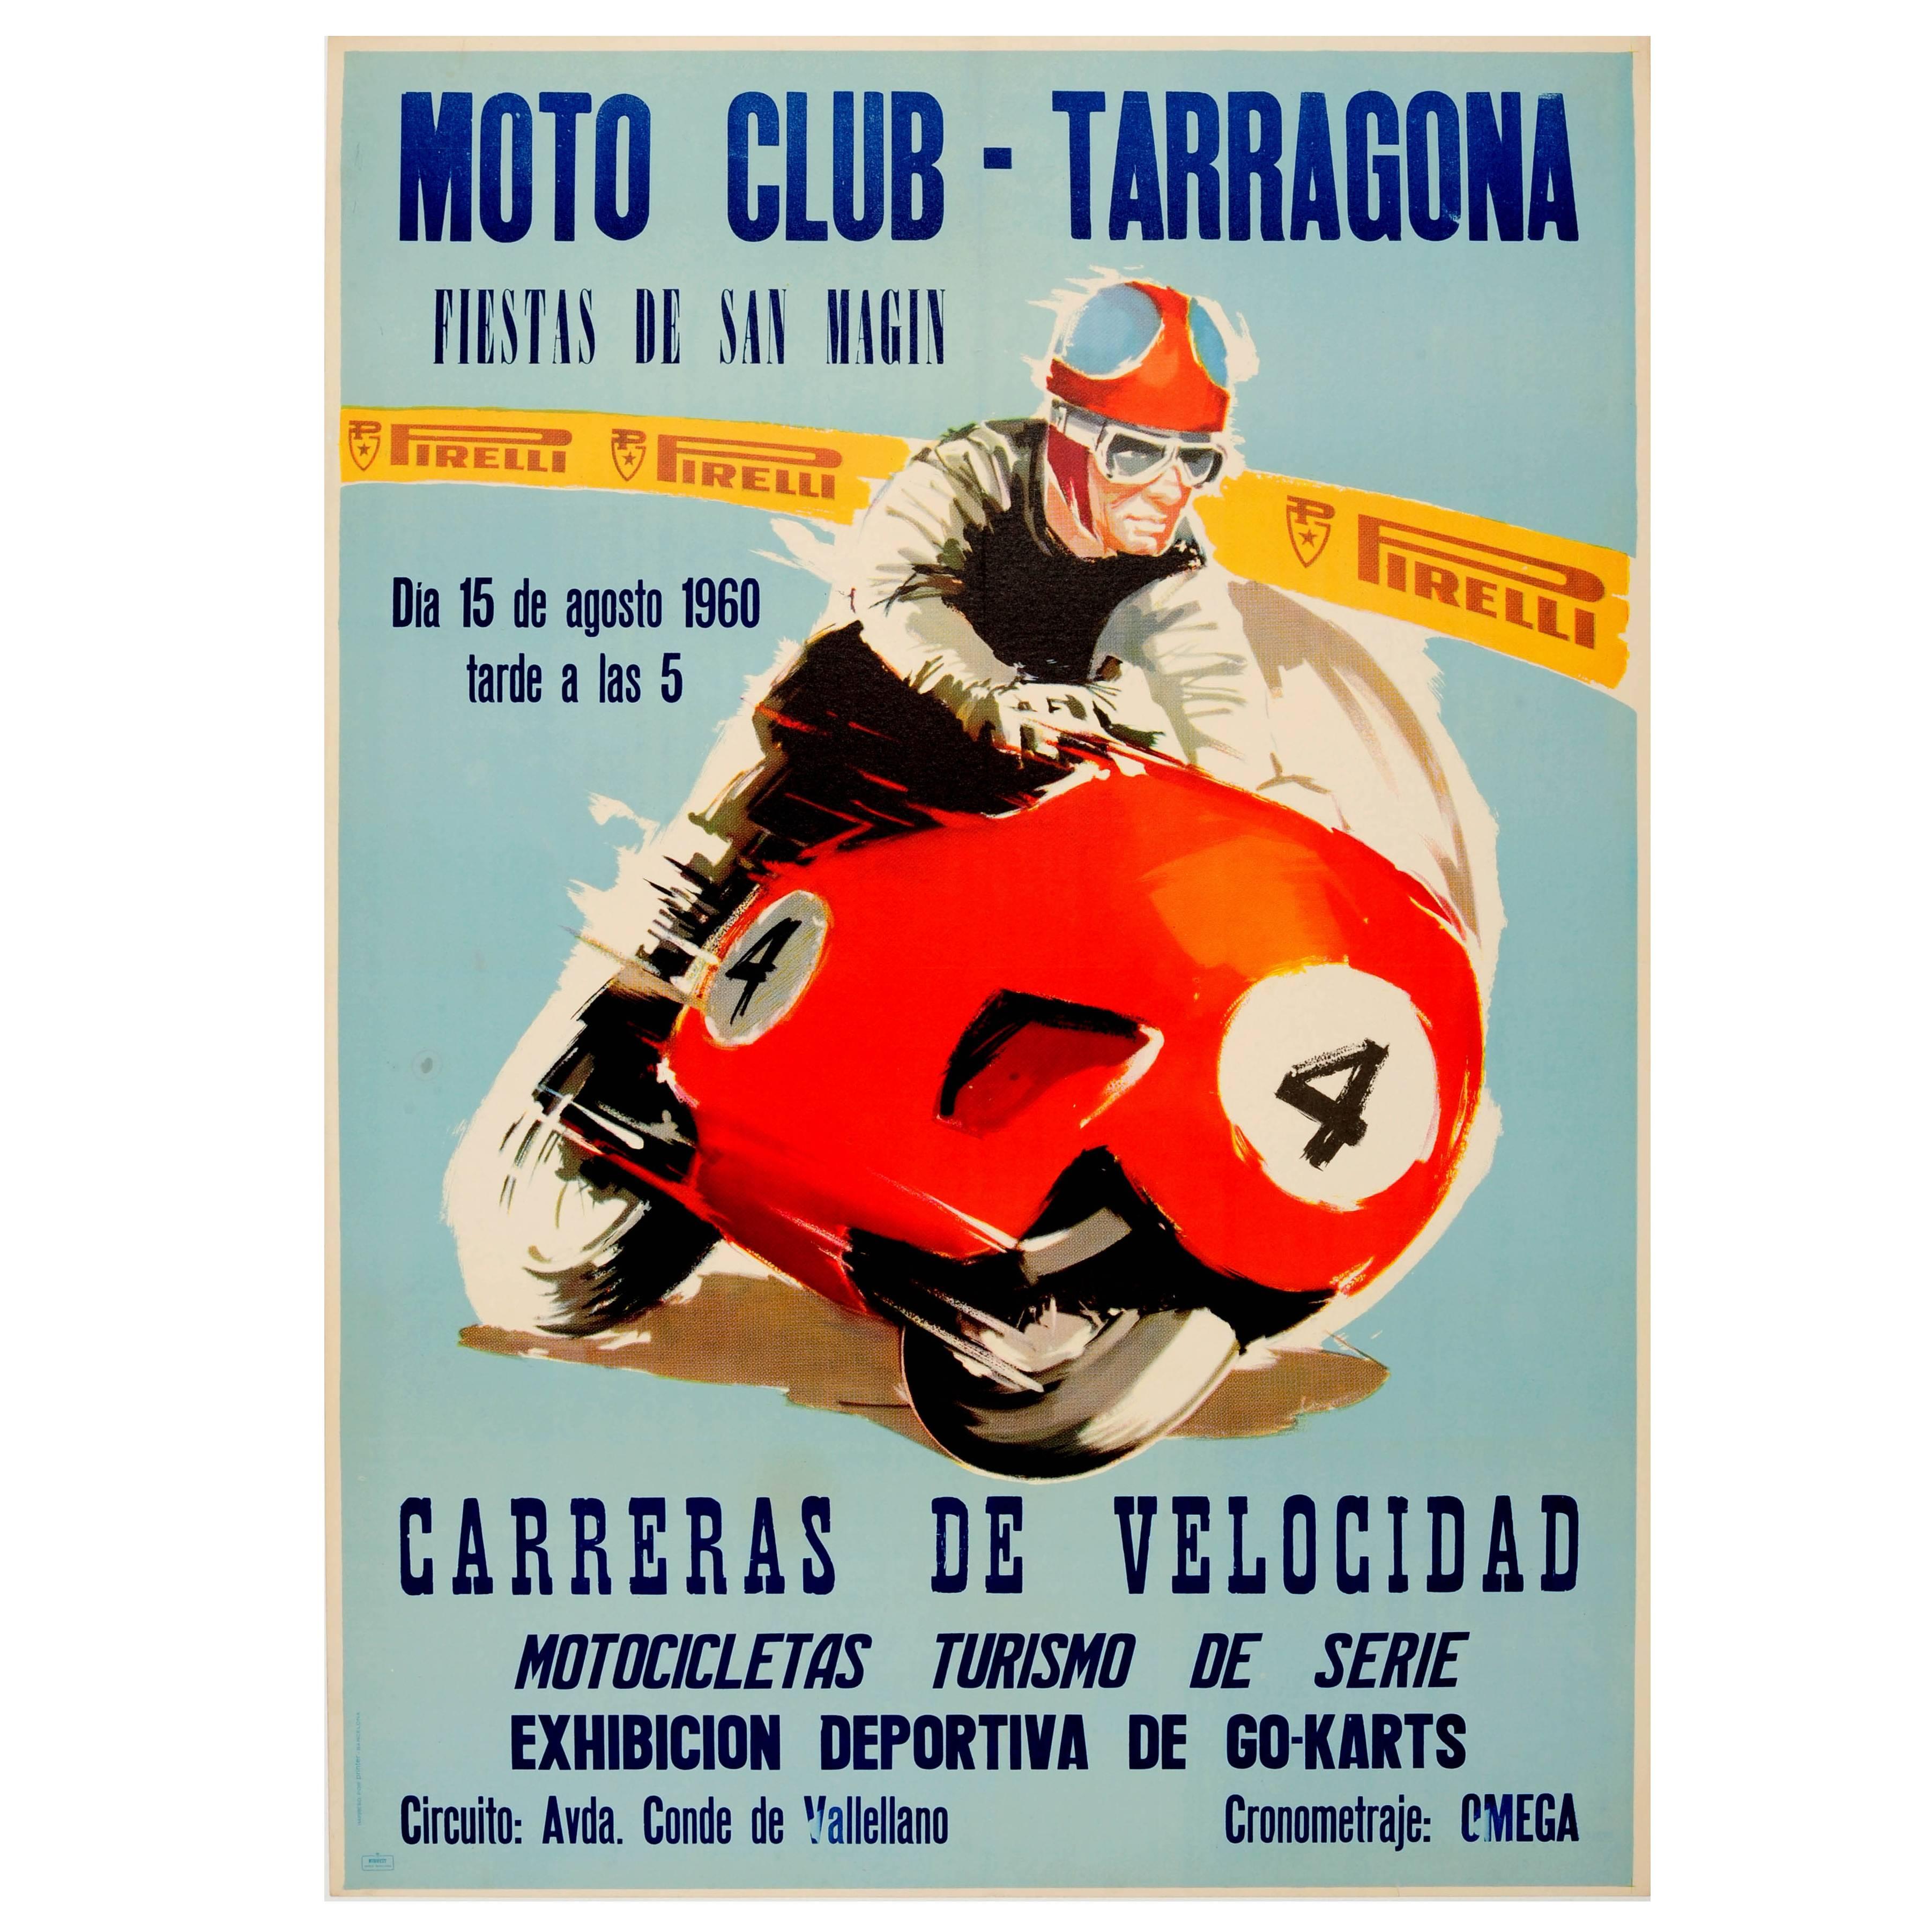 Original Vintage Motorcycle Racing Event Poster For The Moto Club Tarragona 1960